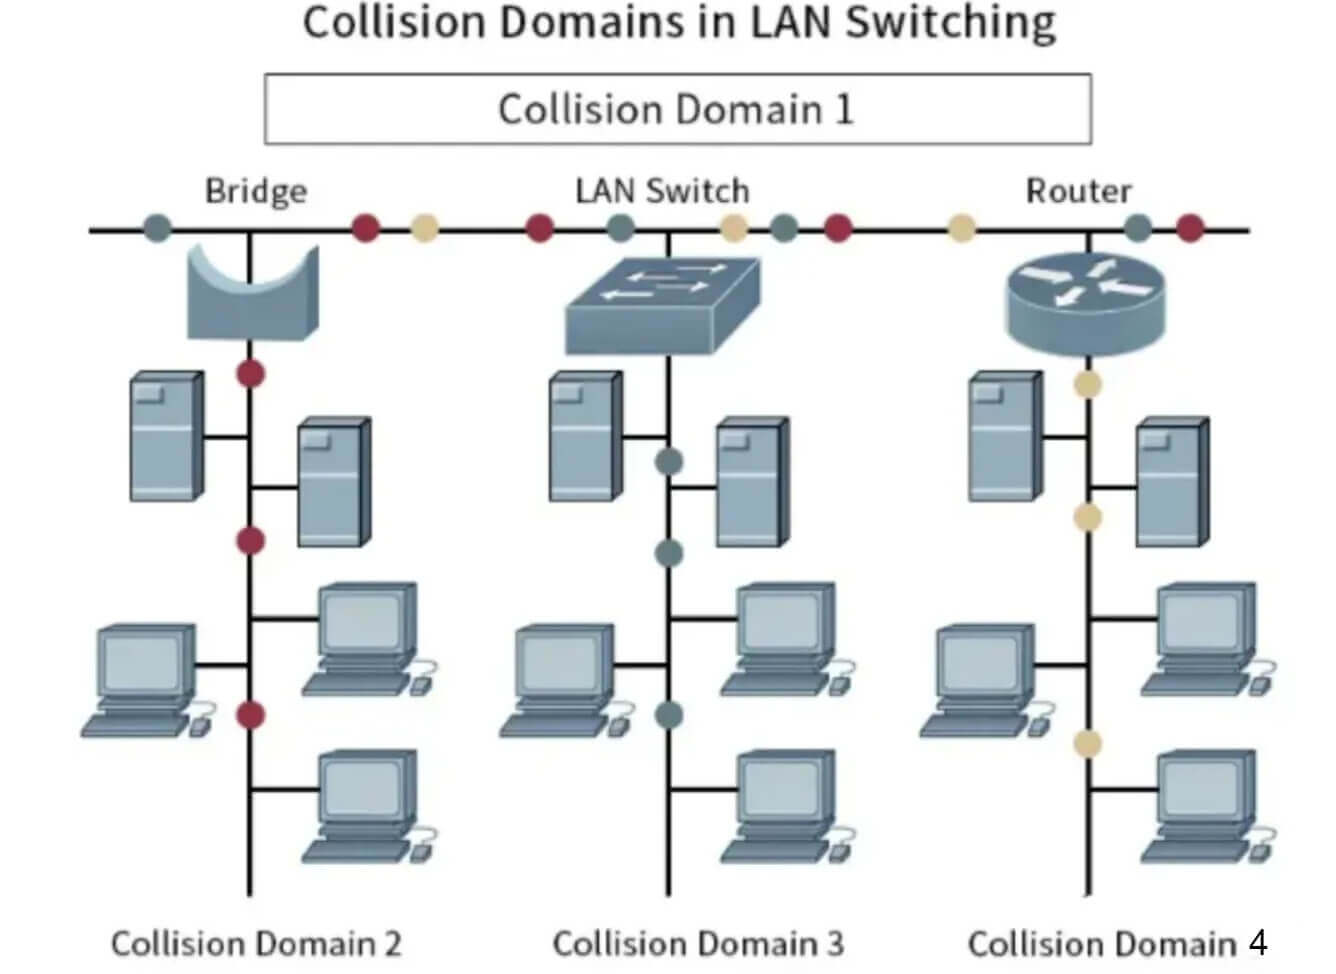 Collision Domains in LAN Switching